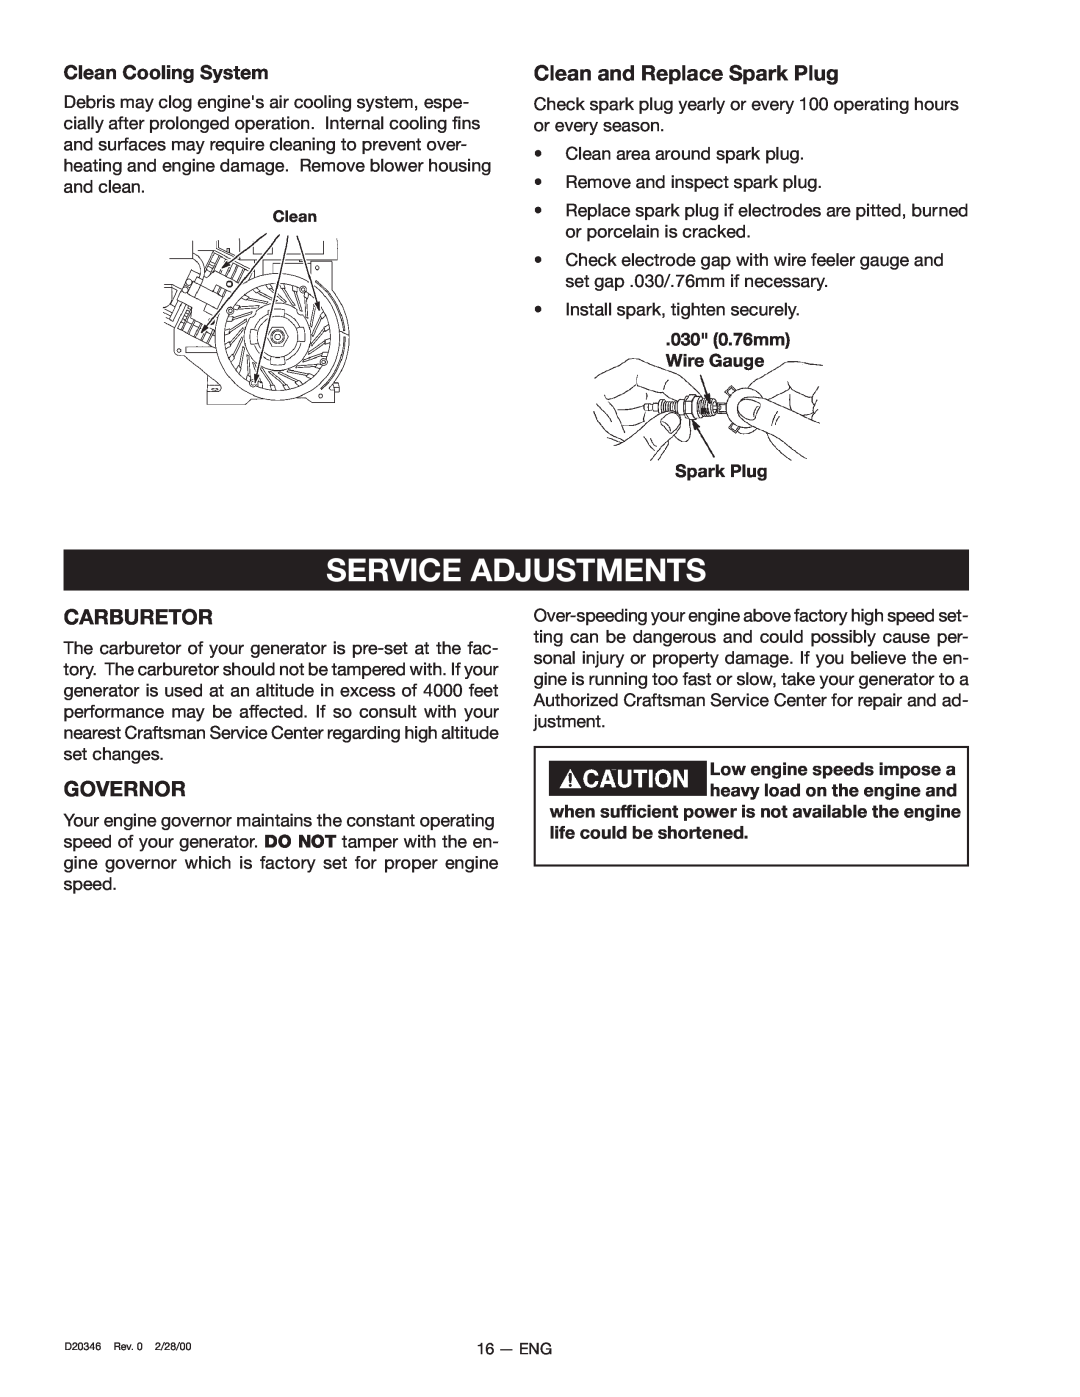 Craftsman 919.670031, D20346 Service Adjustments, Clean and Replace Spark Plug, Carburetor, Governor, Clean Cooling System 